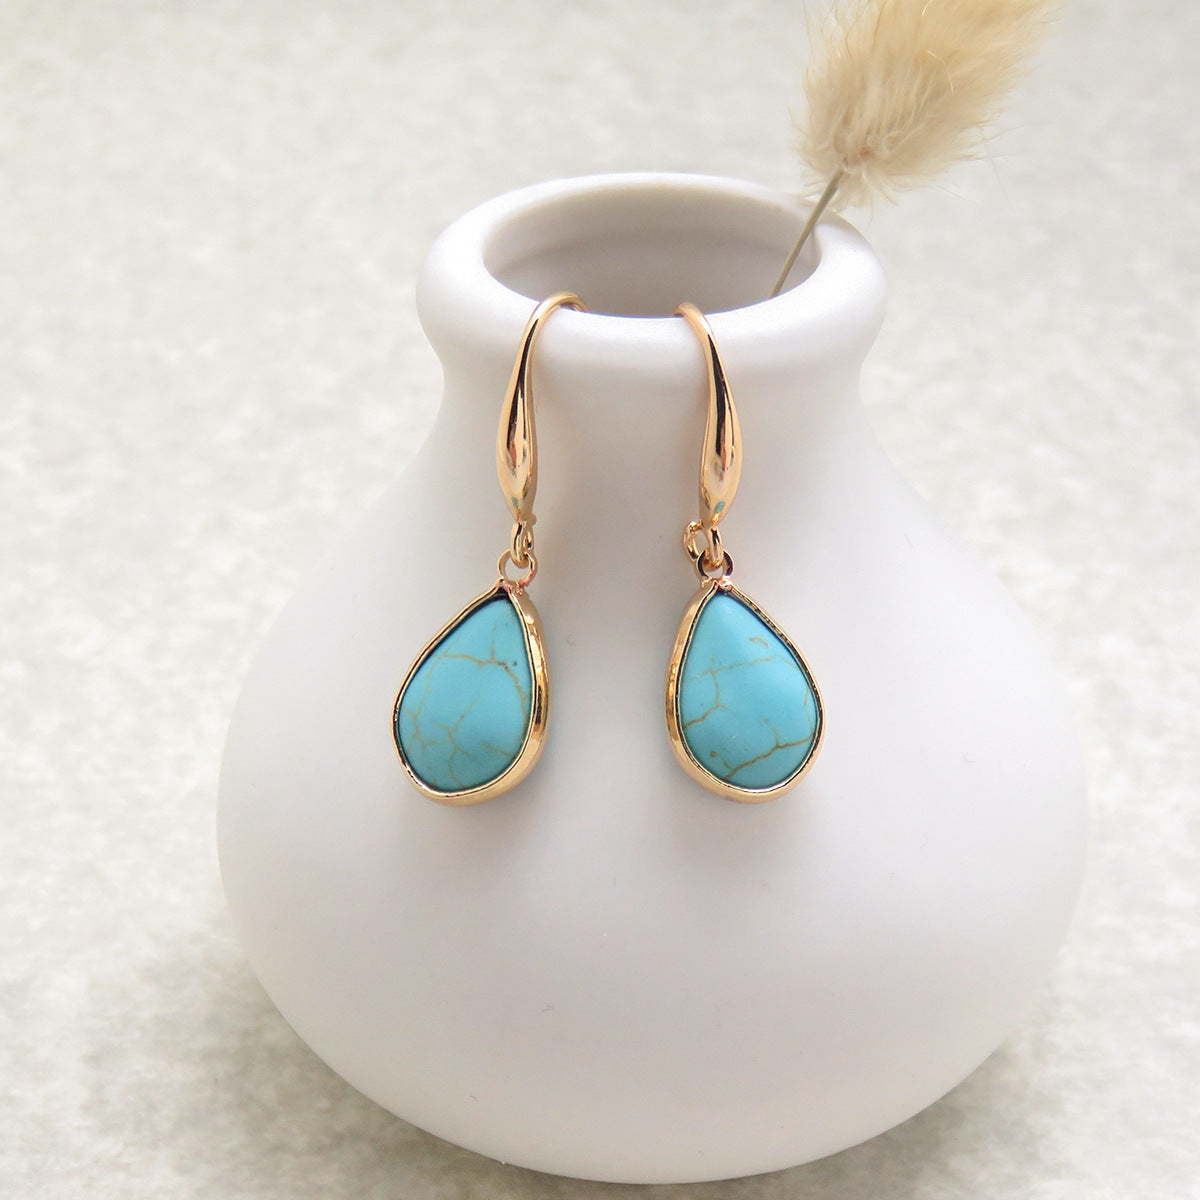 Drop-shaped turquoise earrings